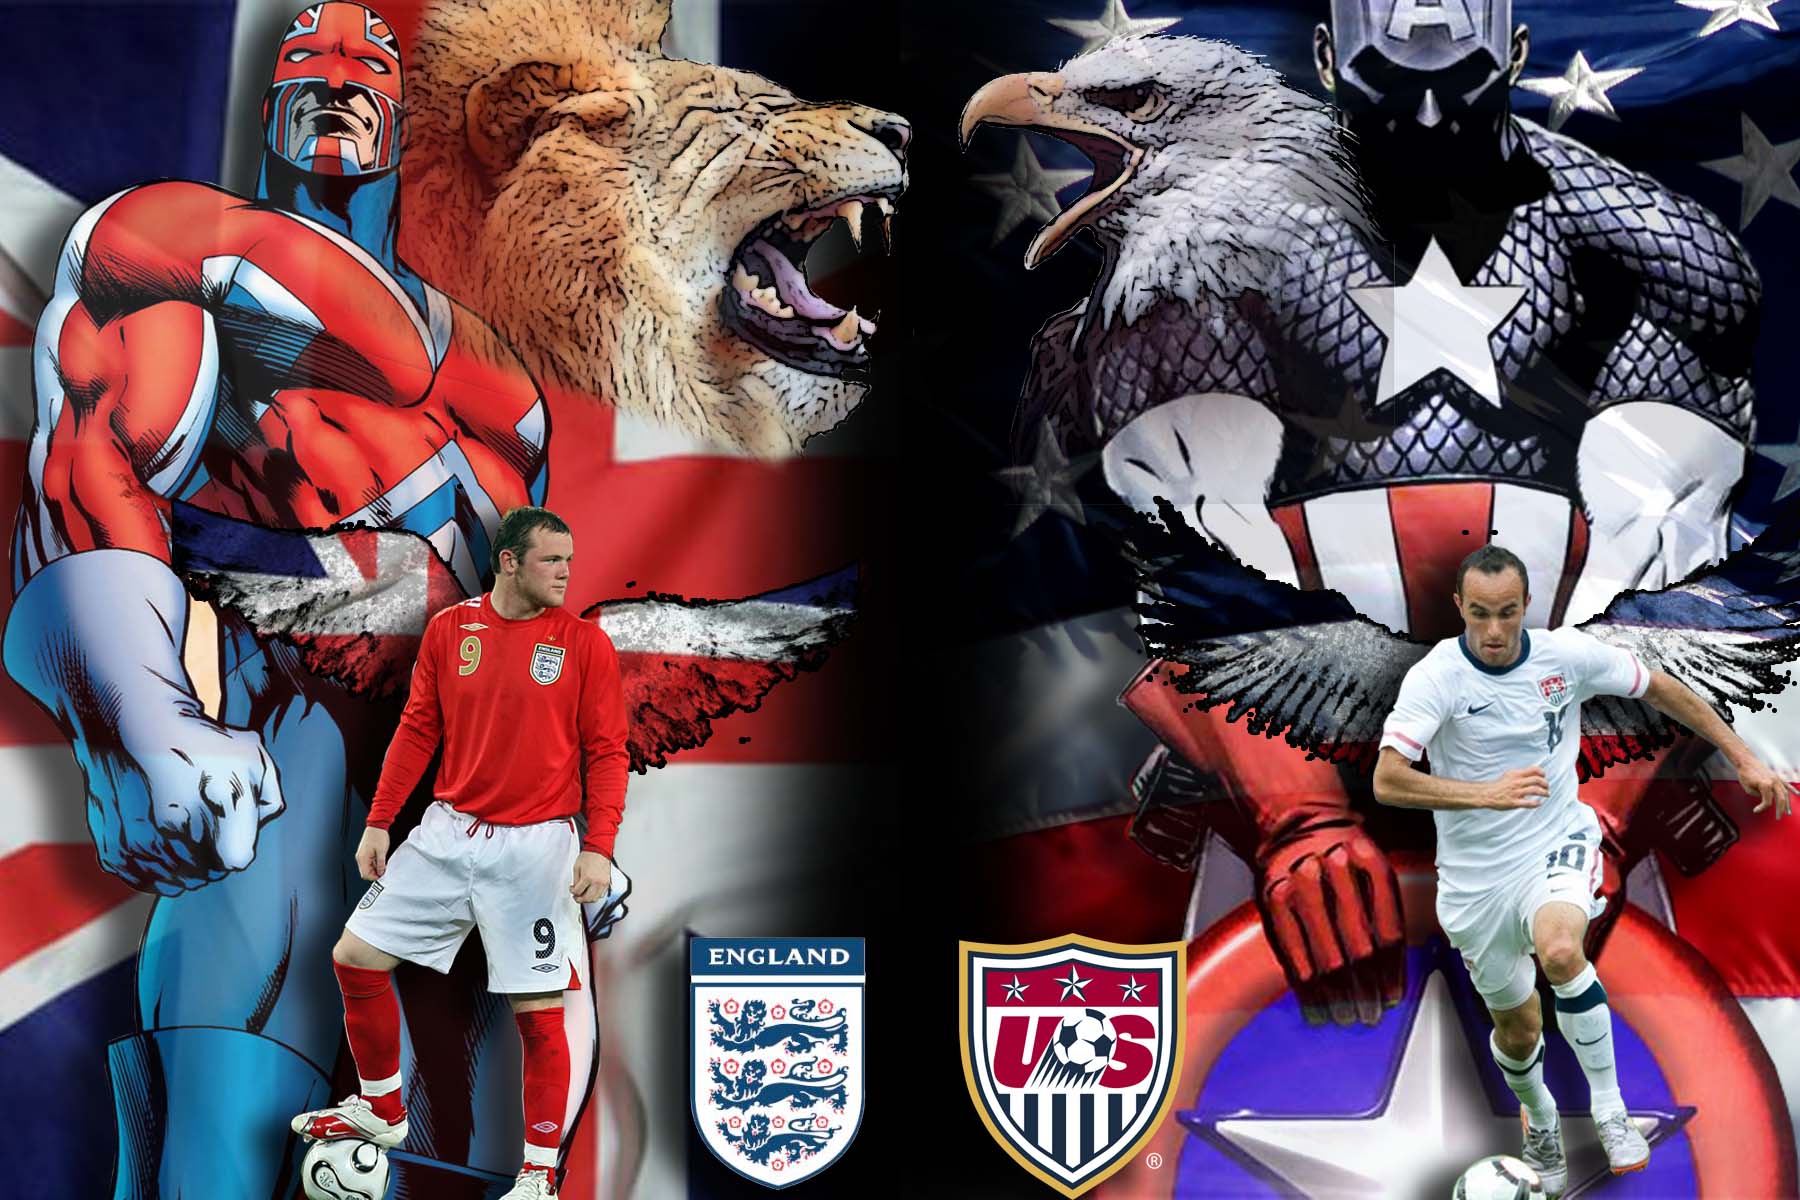 England vs USA by Jallen02 on DeviantArt